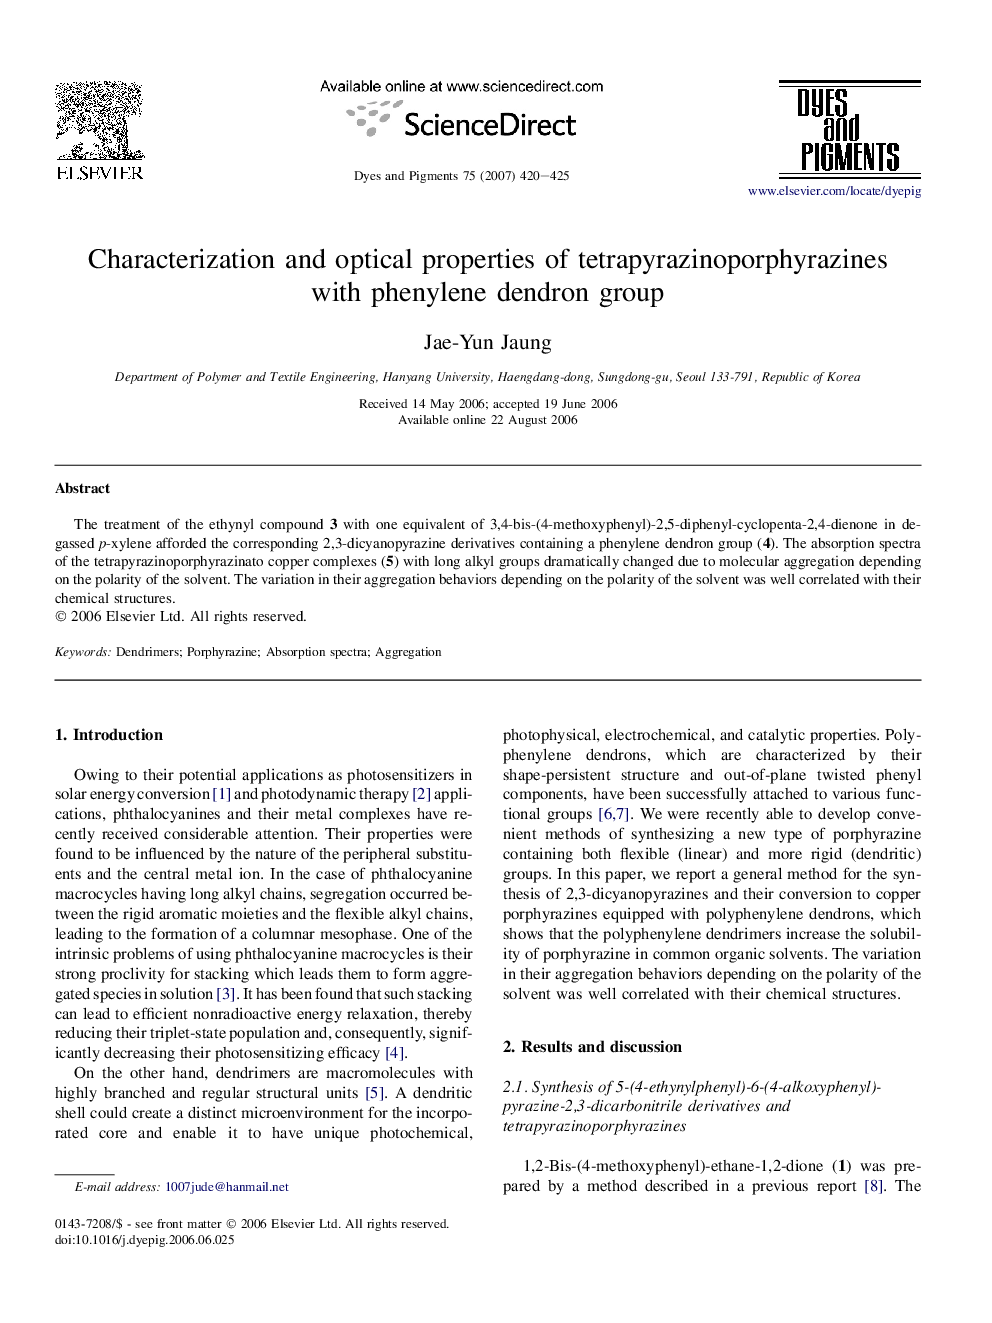 Characterization and optical properties of tetrapyrazinoporphyrazines with phenylene dendron group